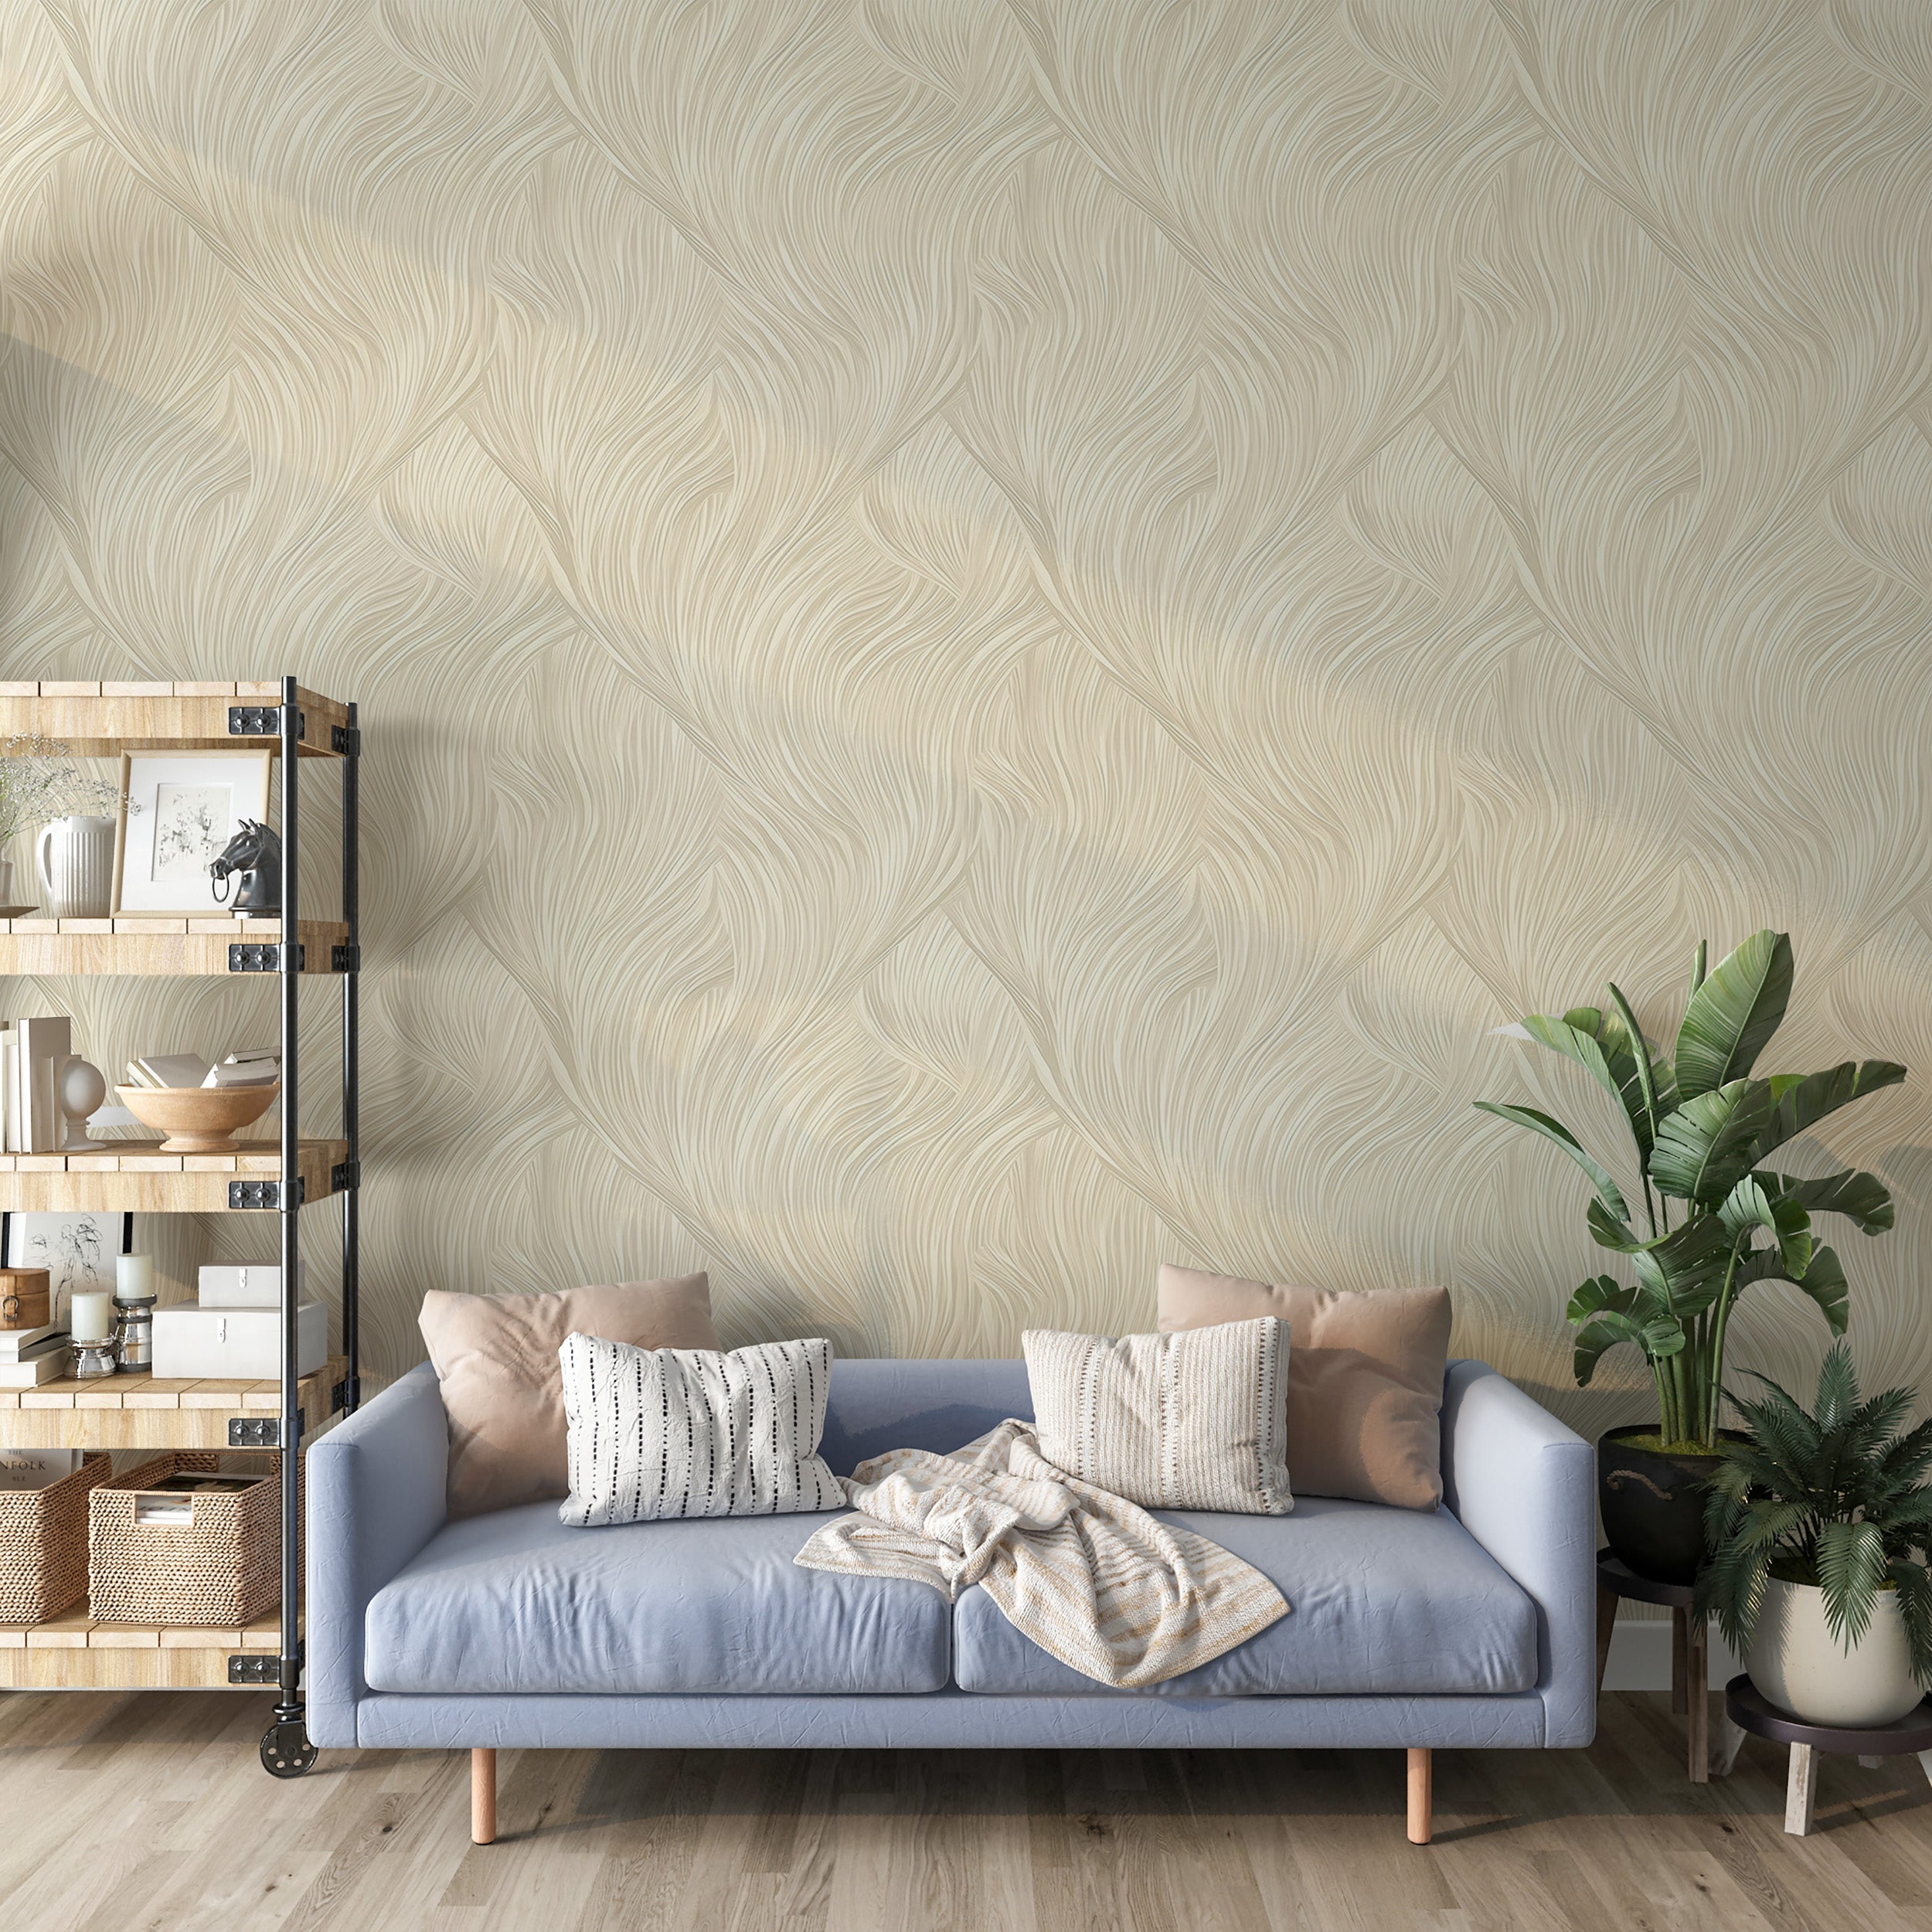 Beige Waves Wallpaper for Serene Room Ambiance